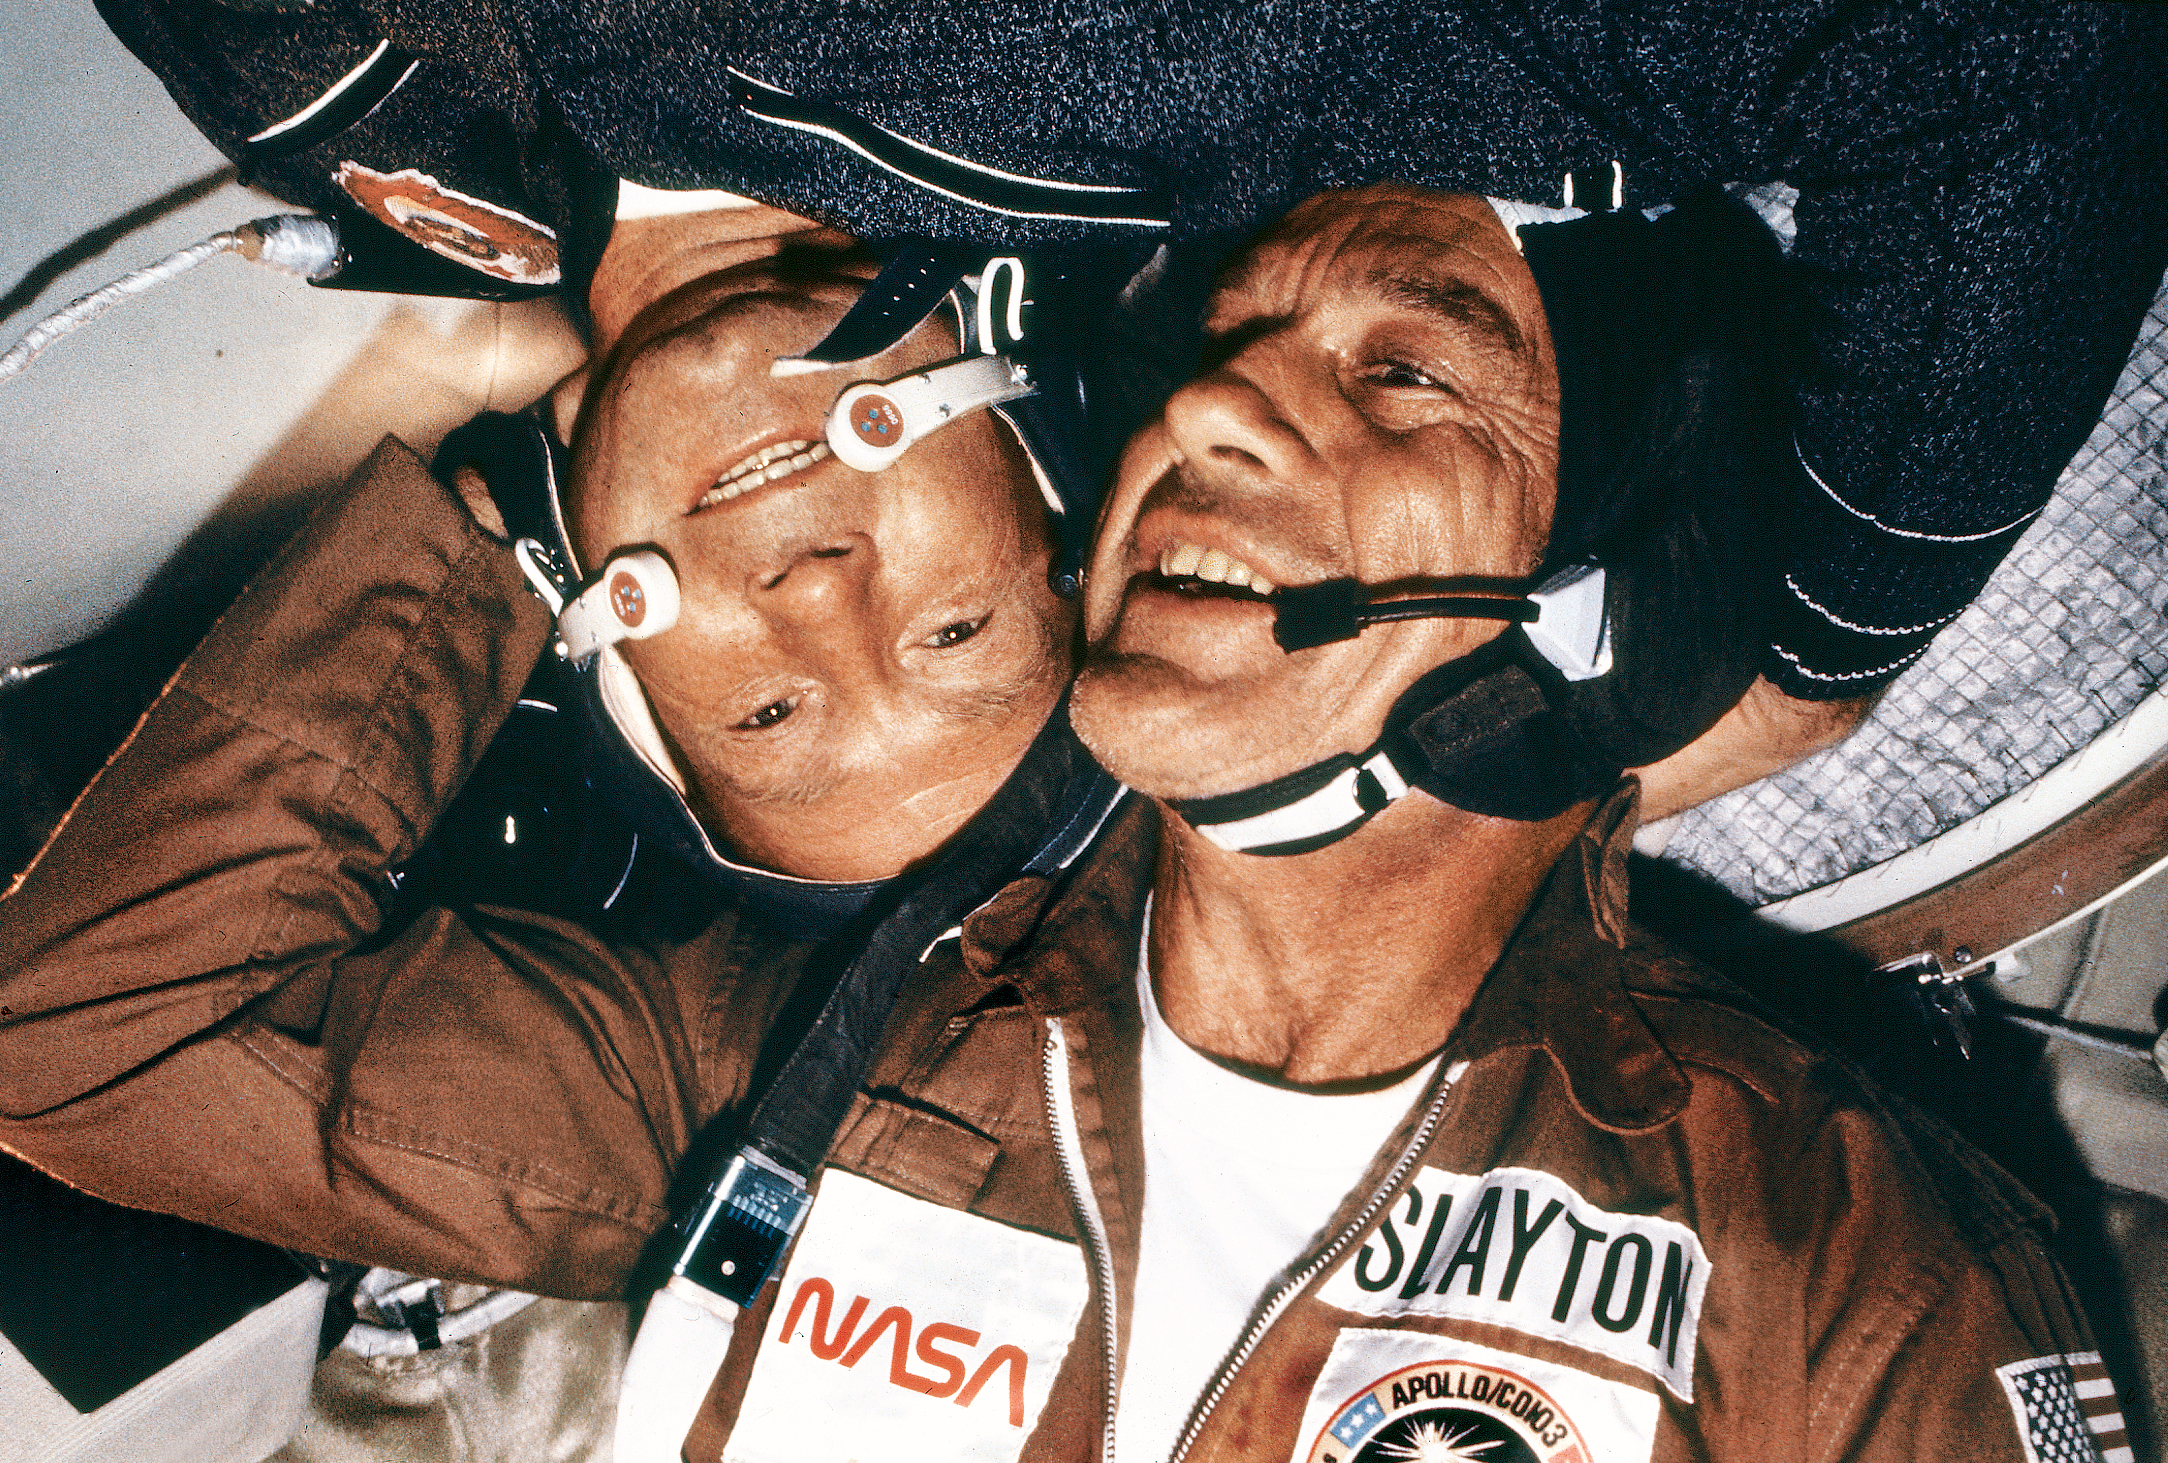 American astronaut Deke Slayton and Russian cosmonaut Alexei Leonov during the US-Soviet Apollo-Soyuz linkup.